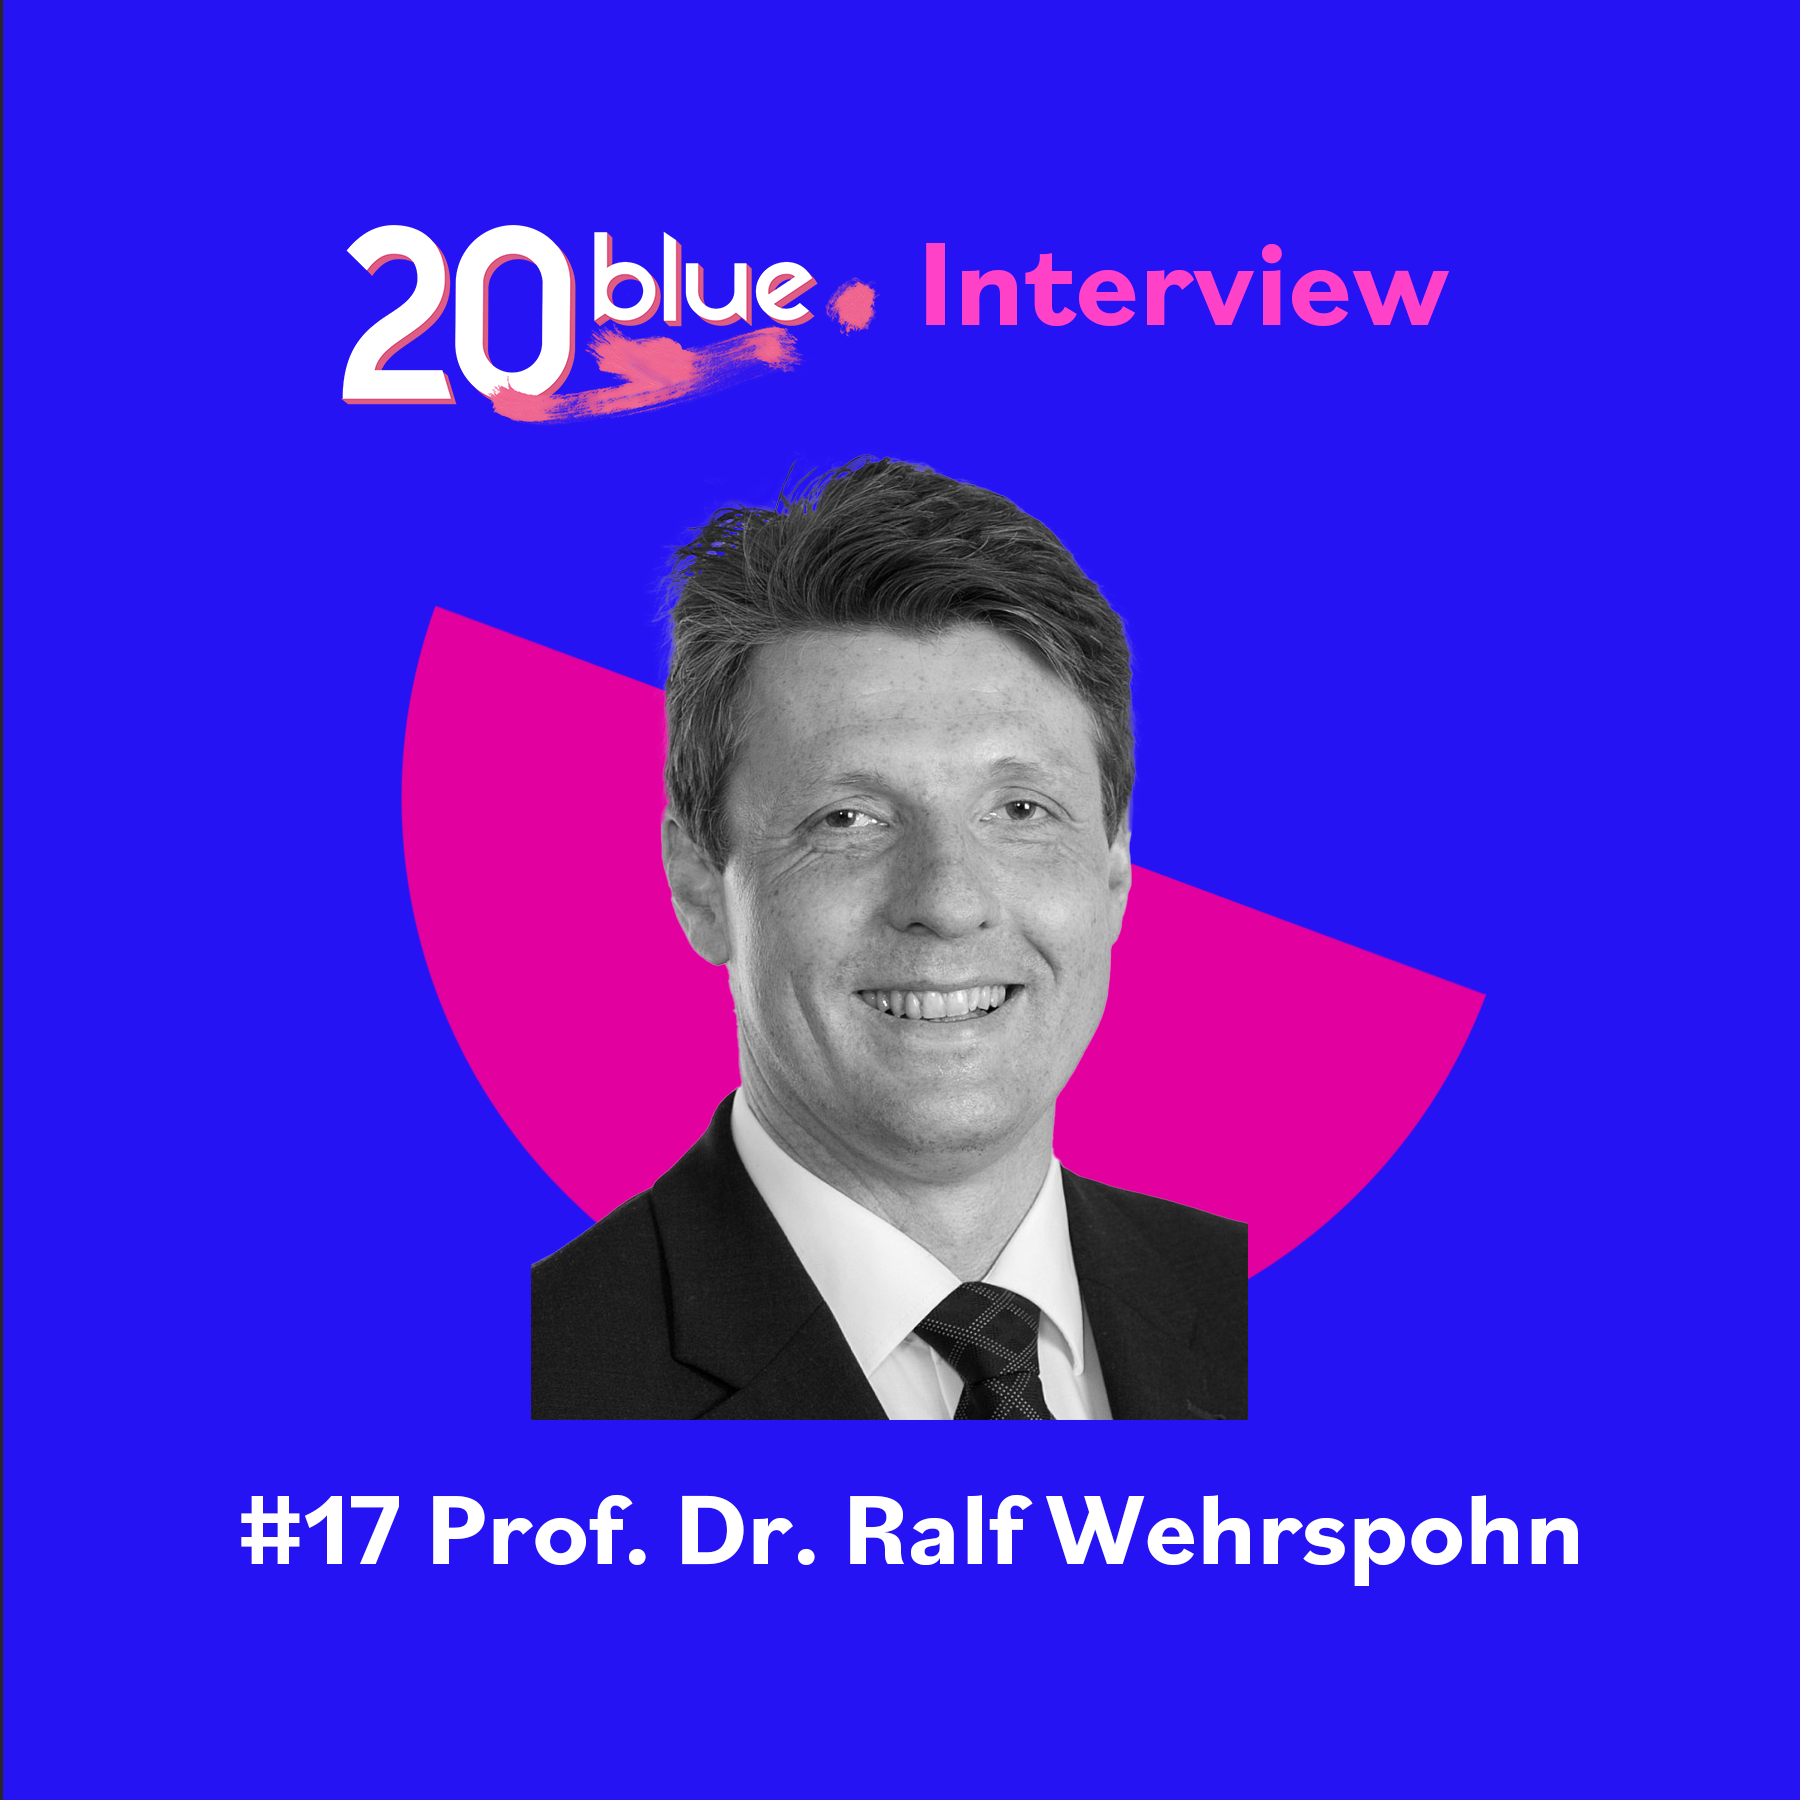 20blue minutes #17: Prof. Dr. Ralf Wehrspohn